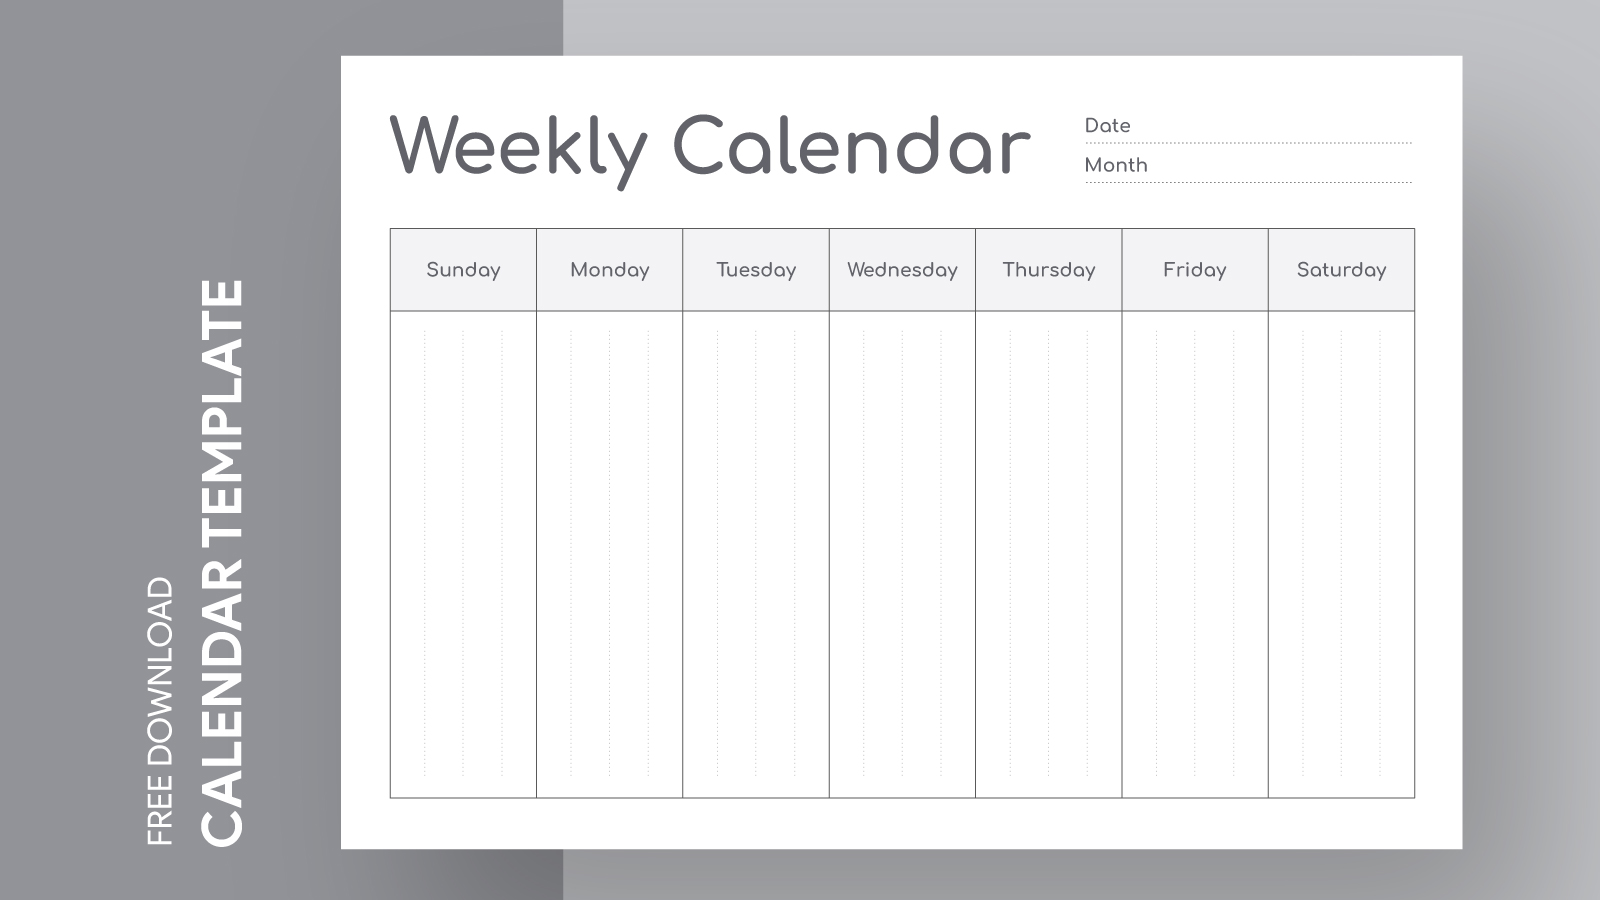 Weekly Calendar Free Google Docs Template - gdoc.io